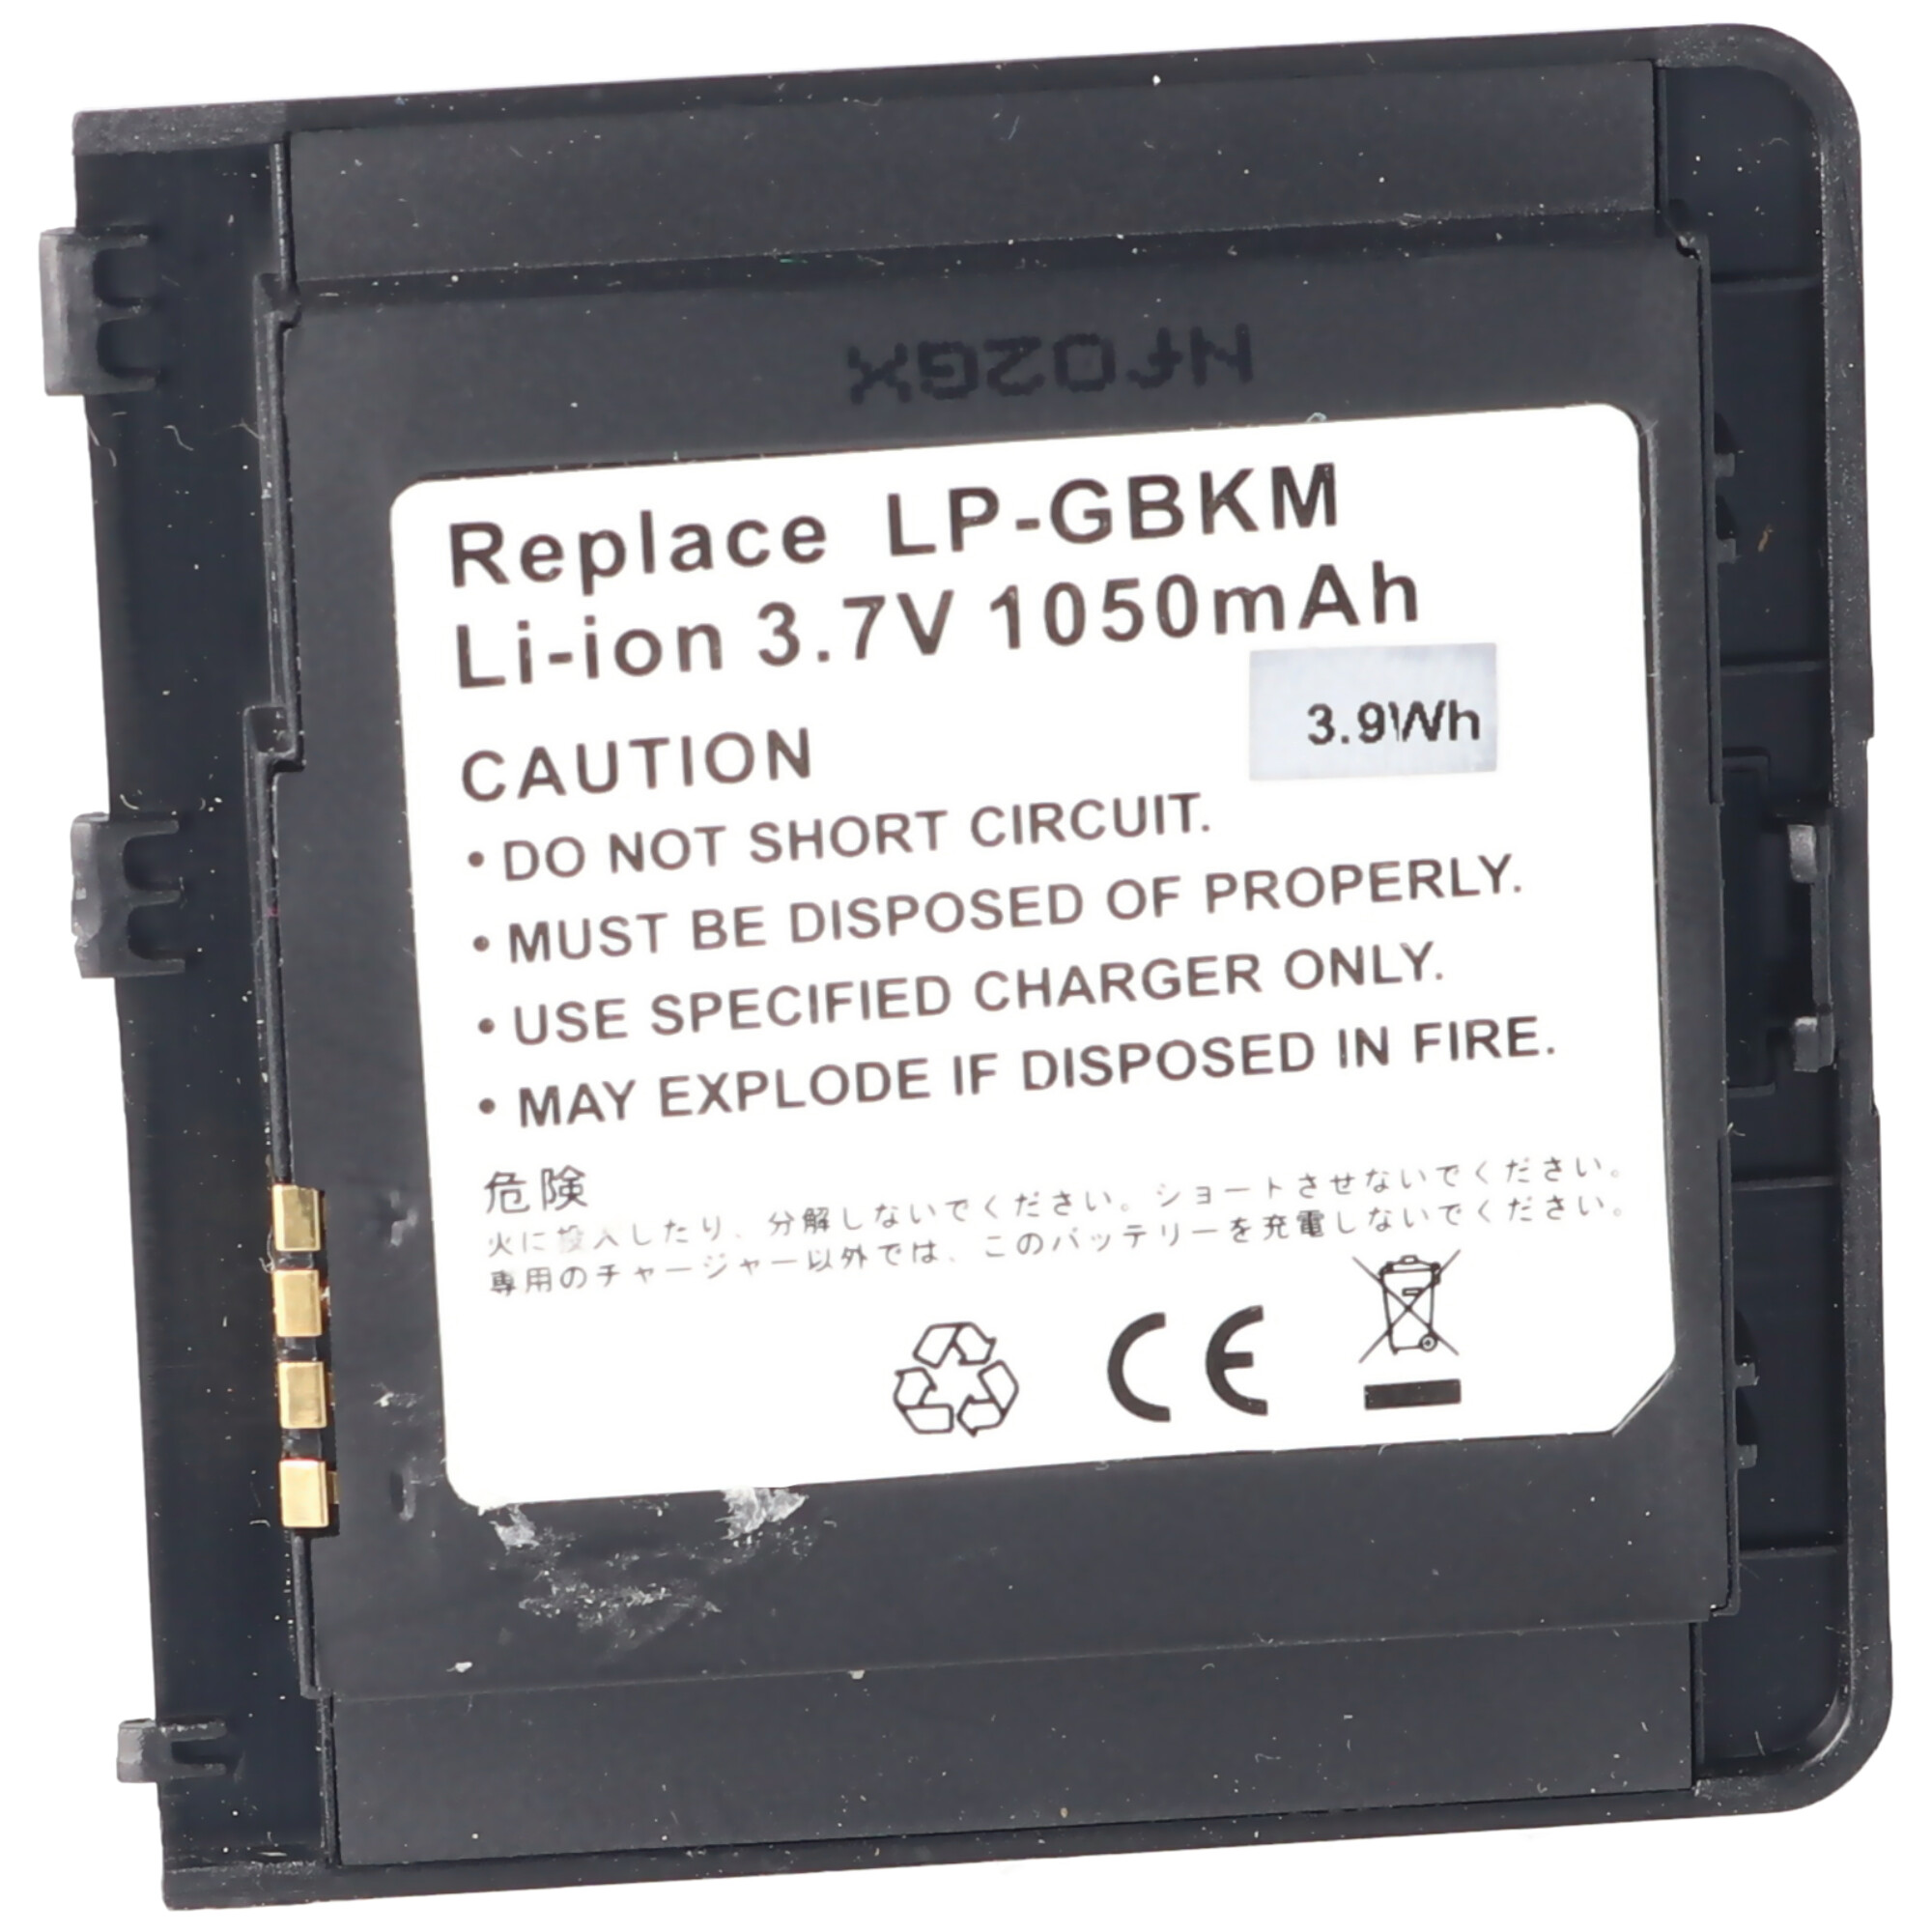 - LG 1050 ACCUCELL Li-Ion passend für Akku KS20, mAh Lithium-Ionen LGLP-GBKM, Handy-Akku, SBPP0023301